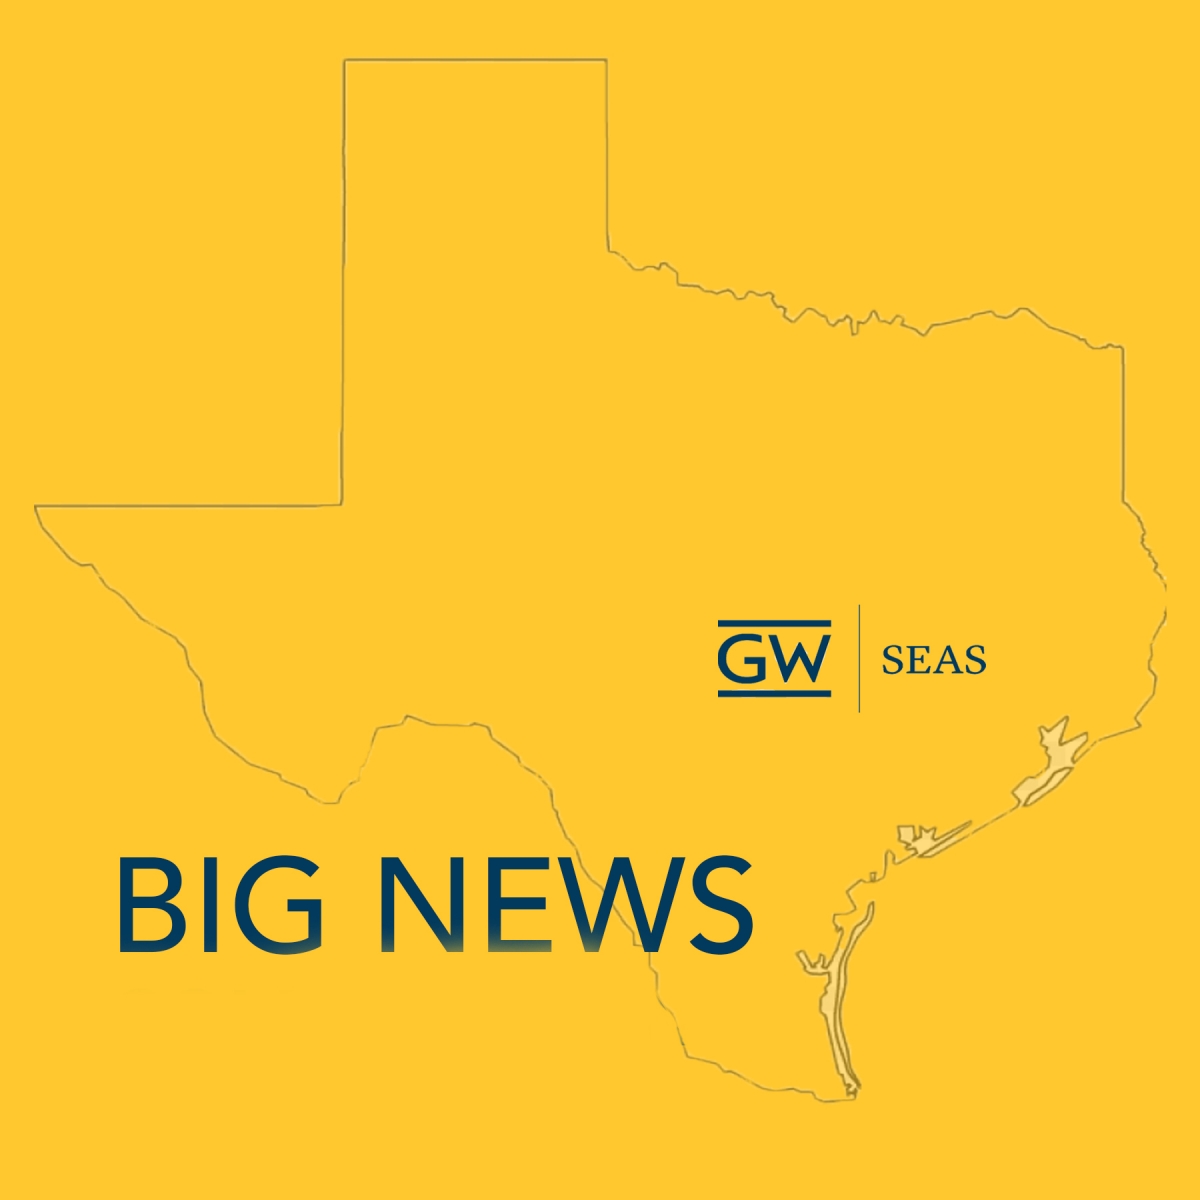 SEAS logo on image of Texas